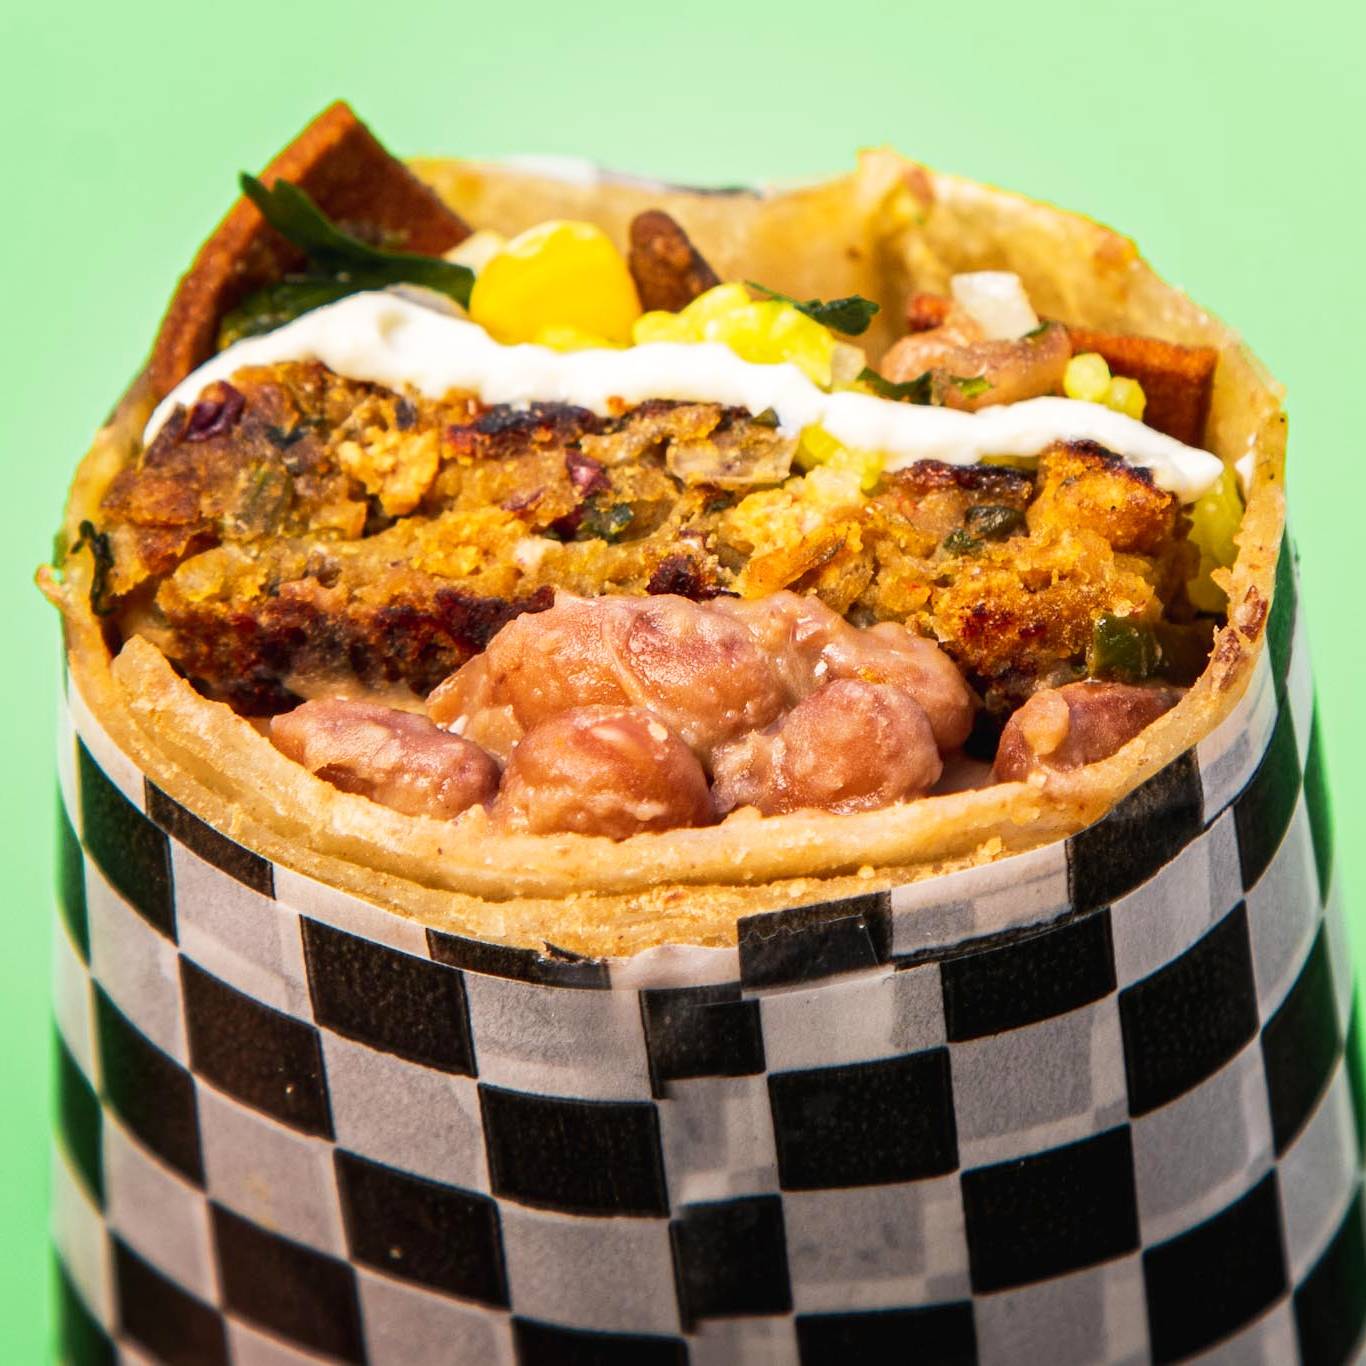 Burrito “Que Macho”